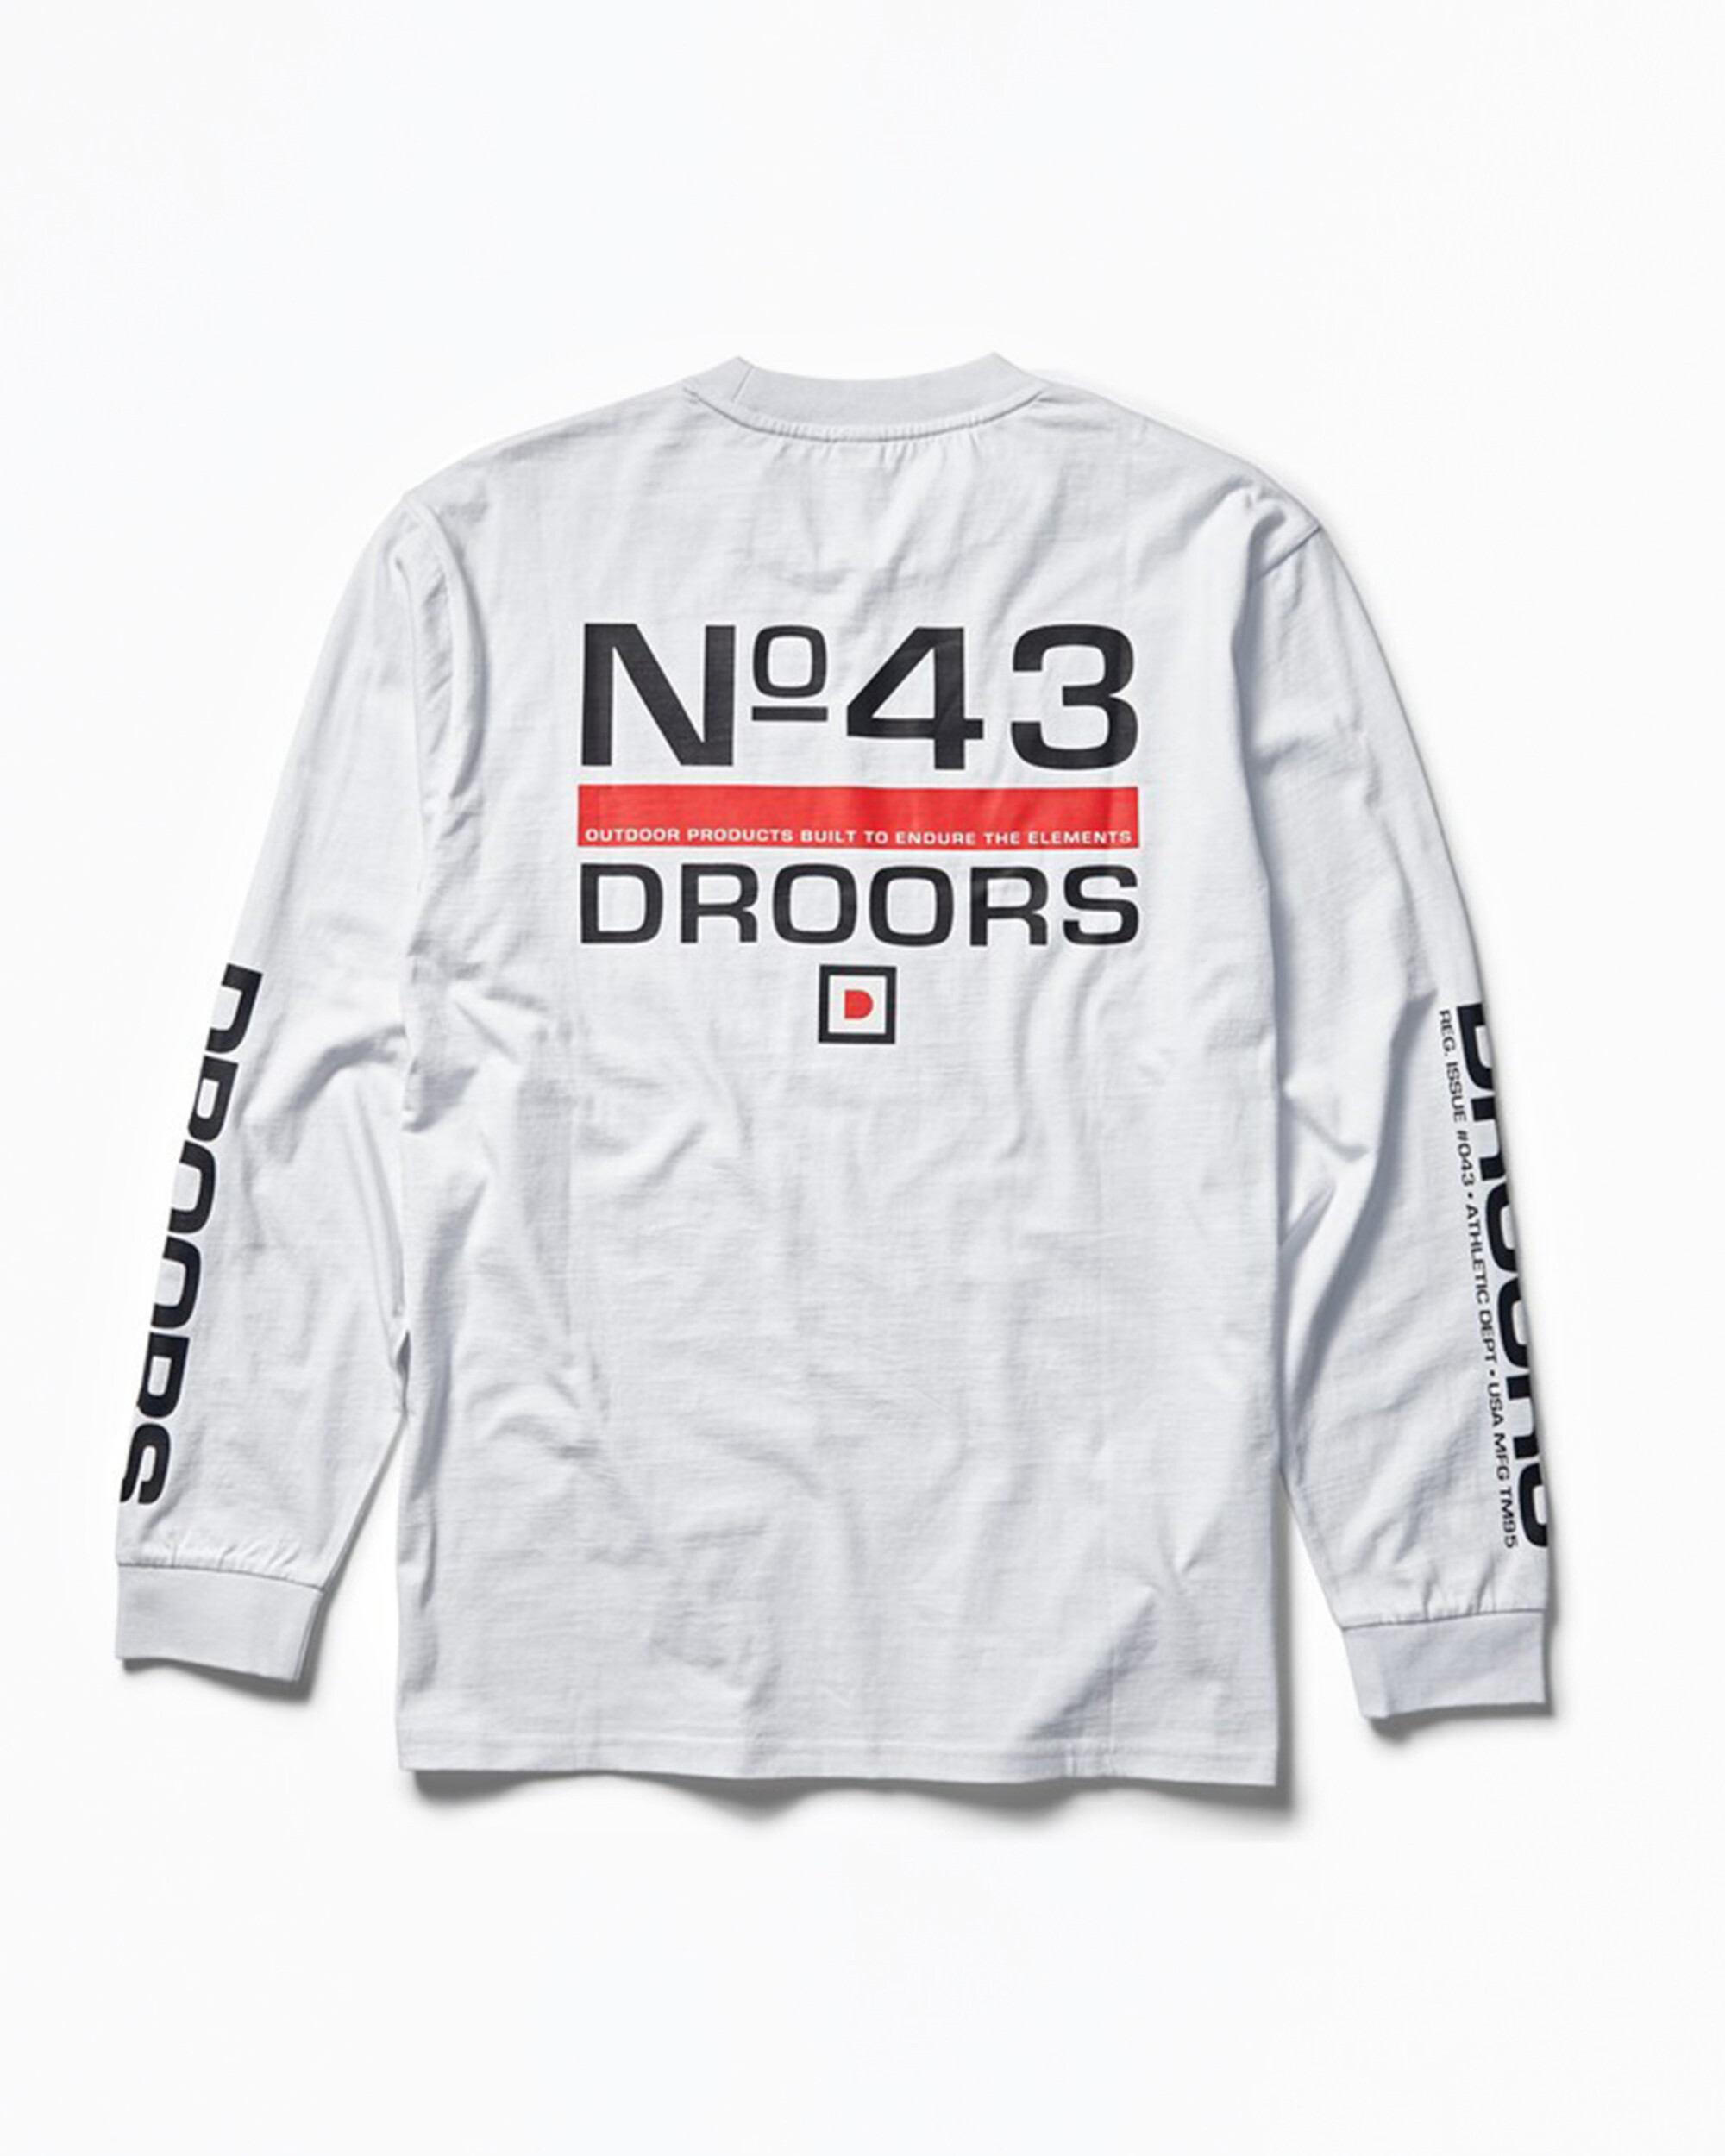 DROORS No. 42 Longsleeve T-Shirt White